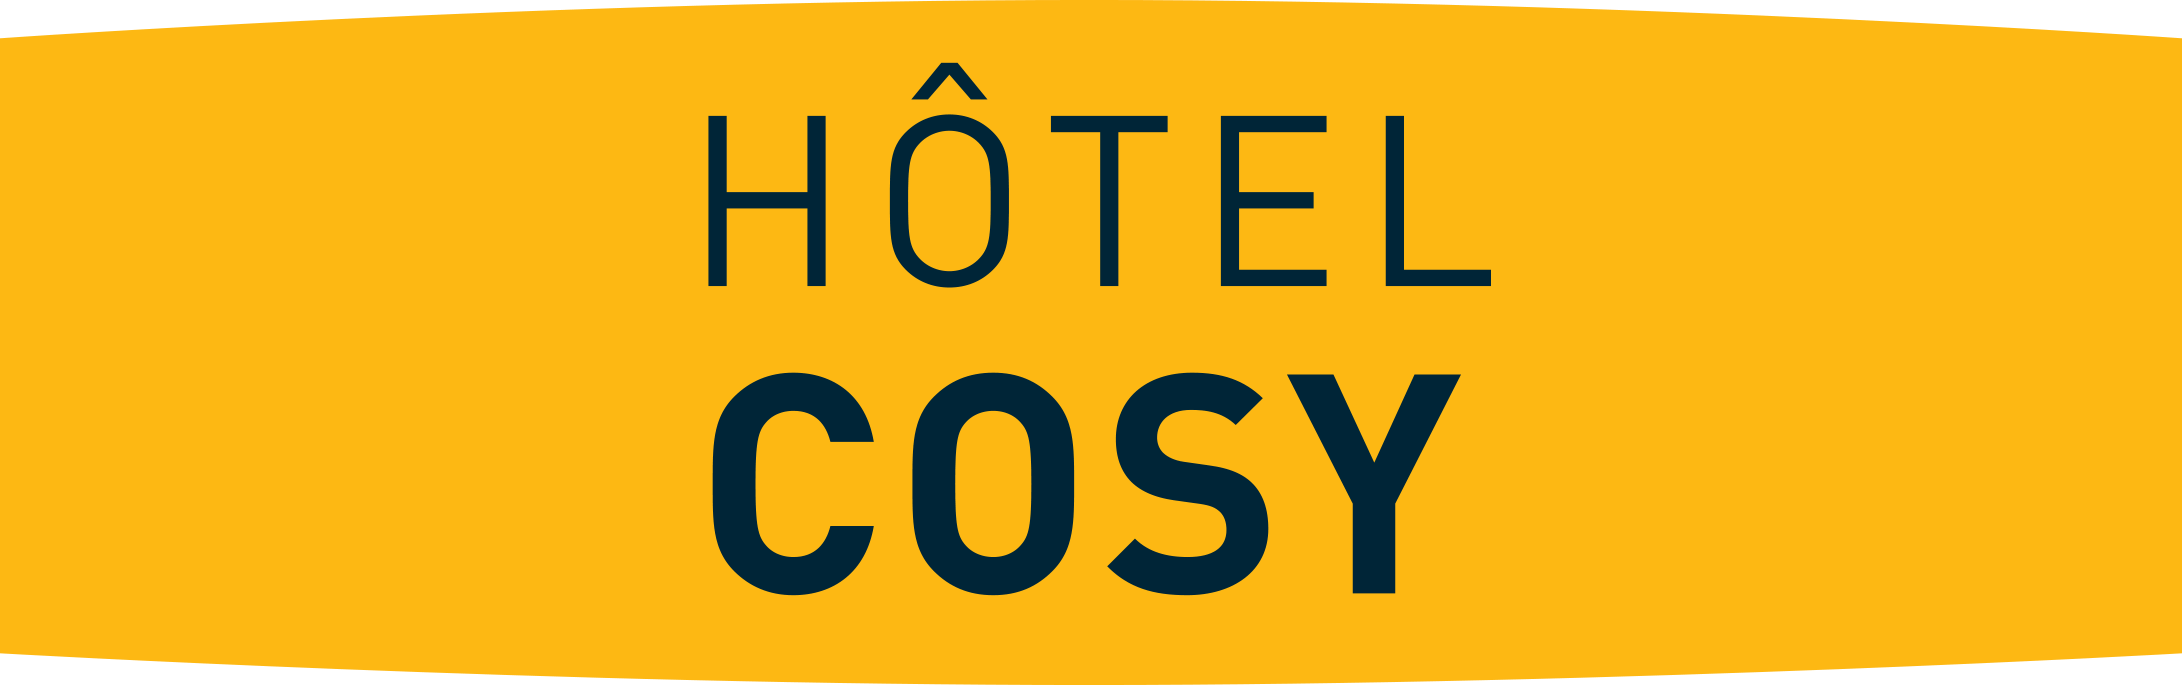 Hotel cosy